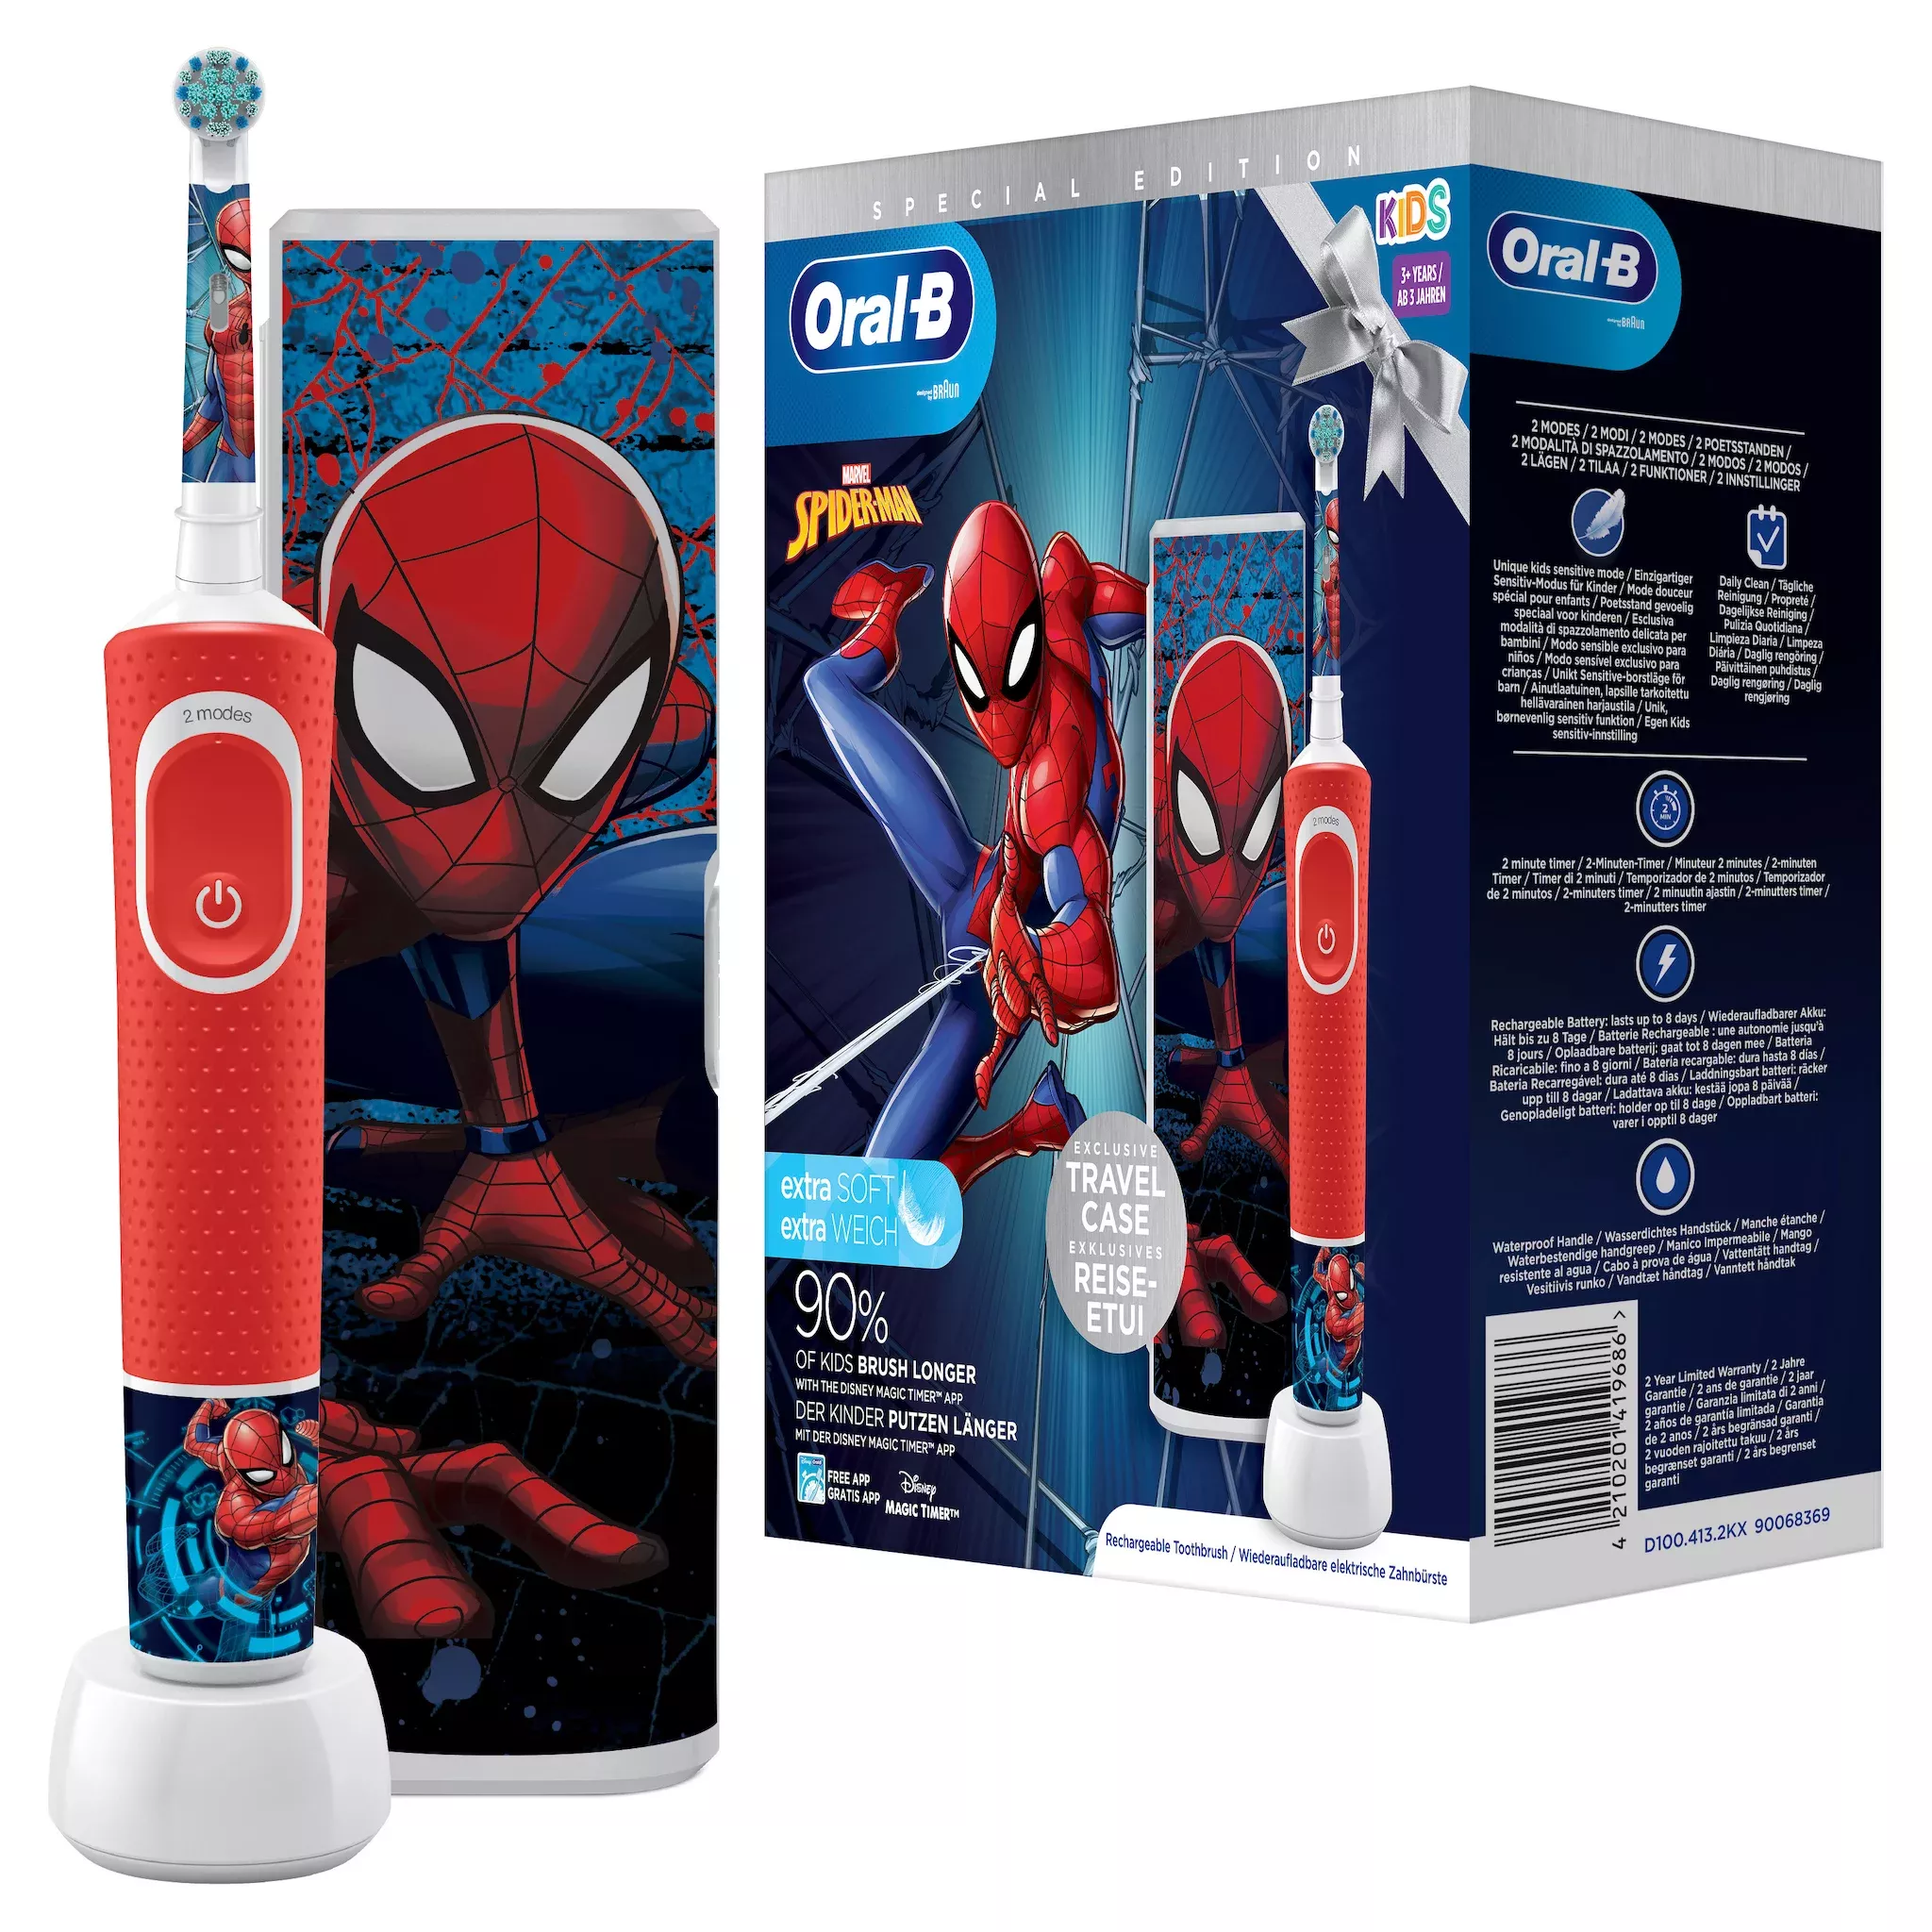 Oral-B D100k Spiderman Gift Pack